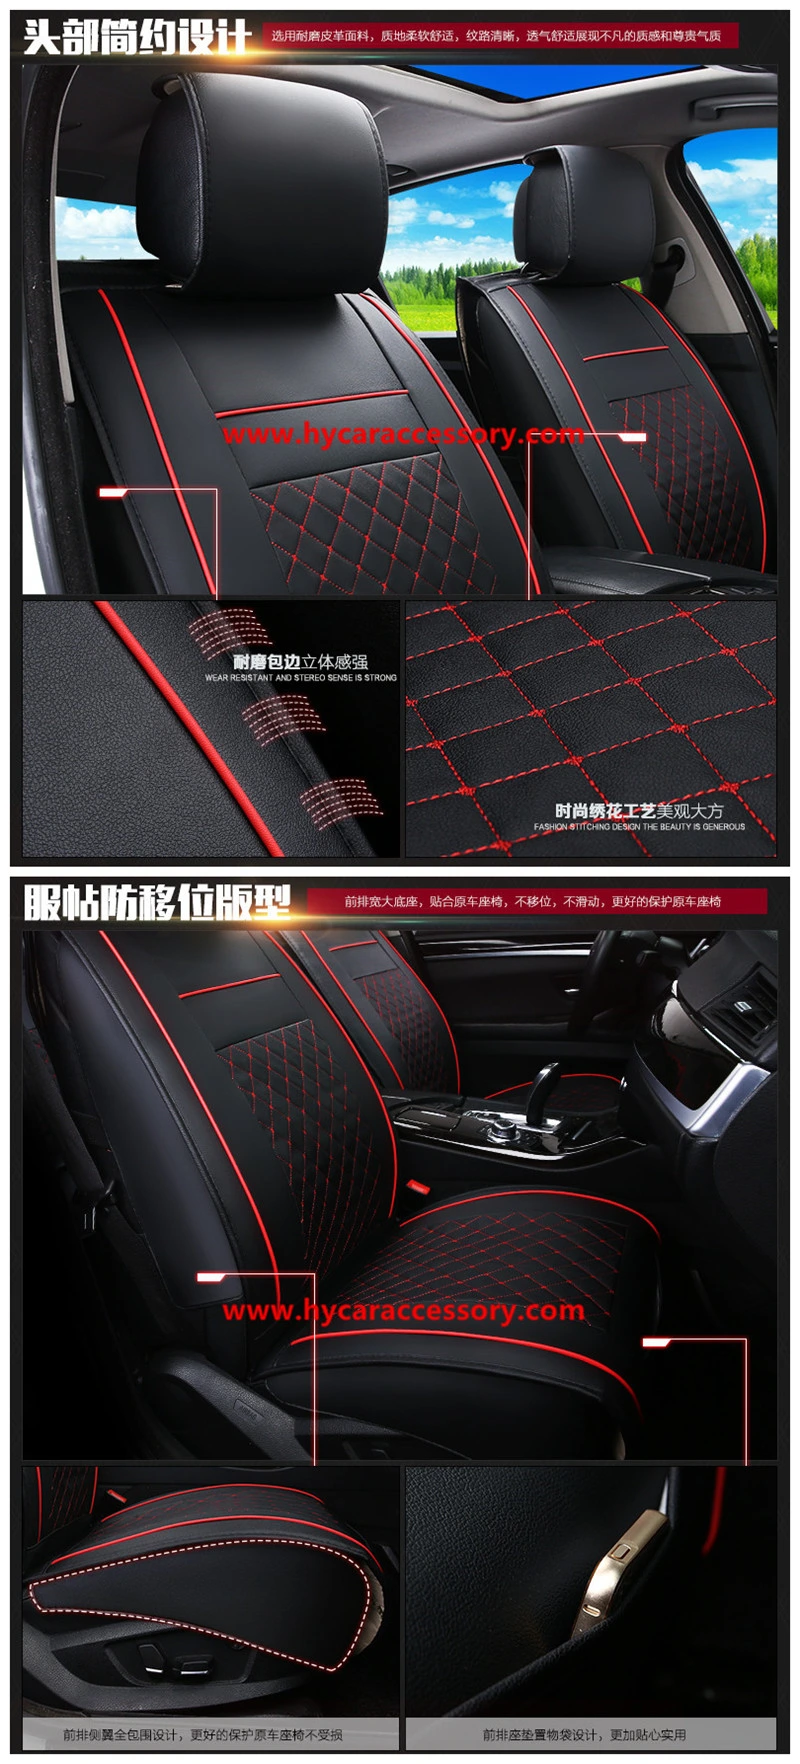 Car Accessory Car Decoration Cushion Universal Cartoon Pure Leather Auto Car Seat Cover